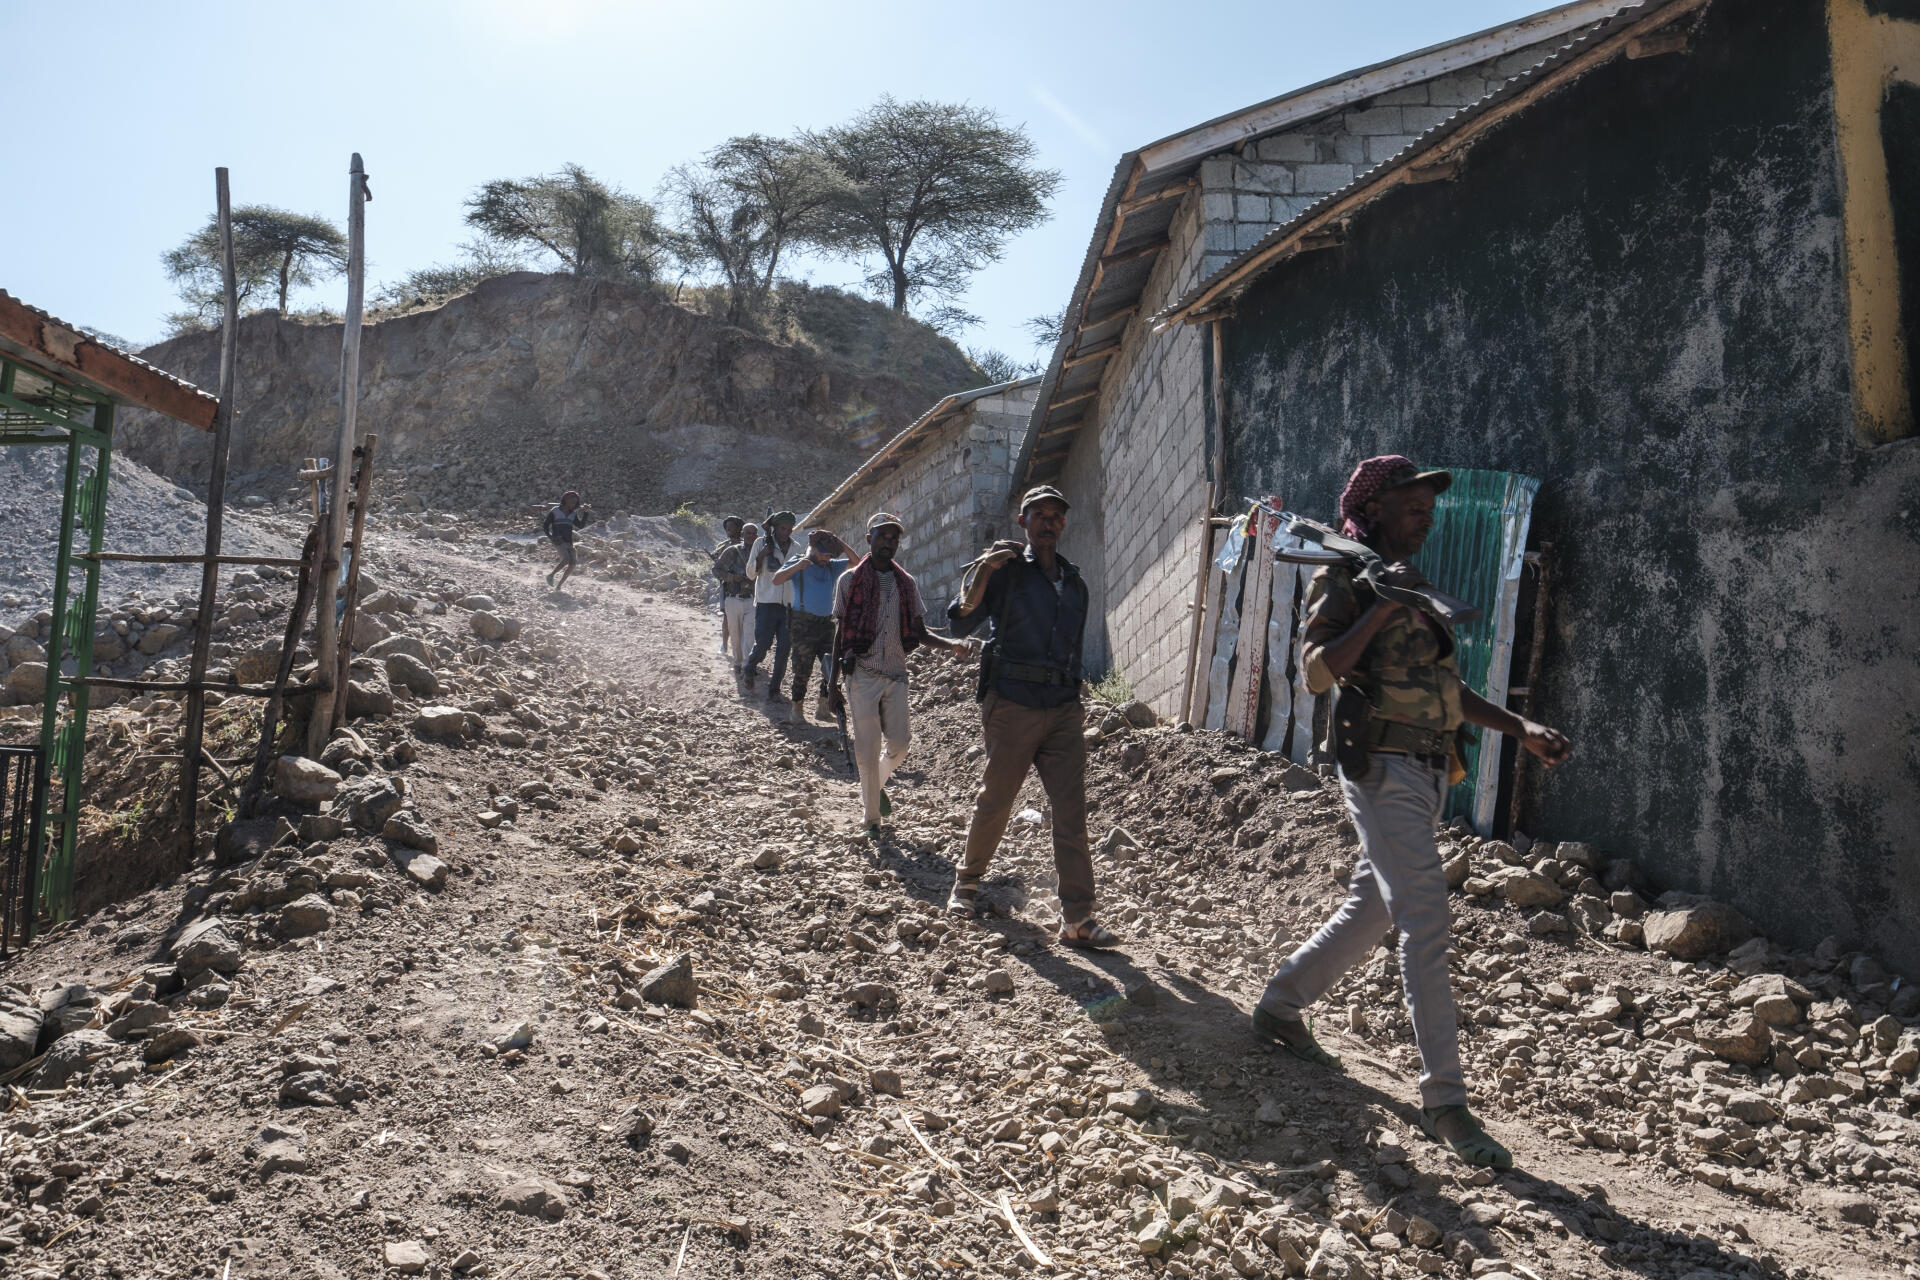 Members of the Amhara militia descend a hill near the village of Wanza, Ethiopia, December 9, 2021.